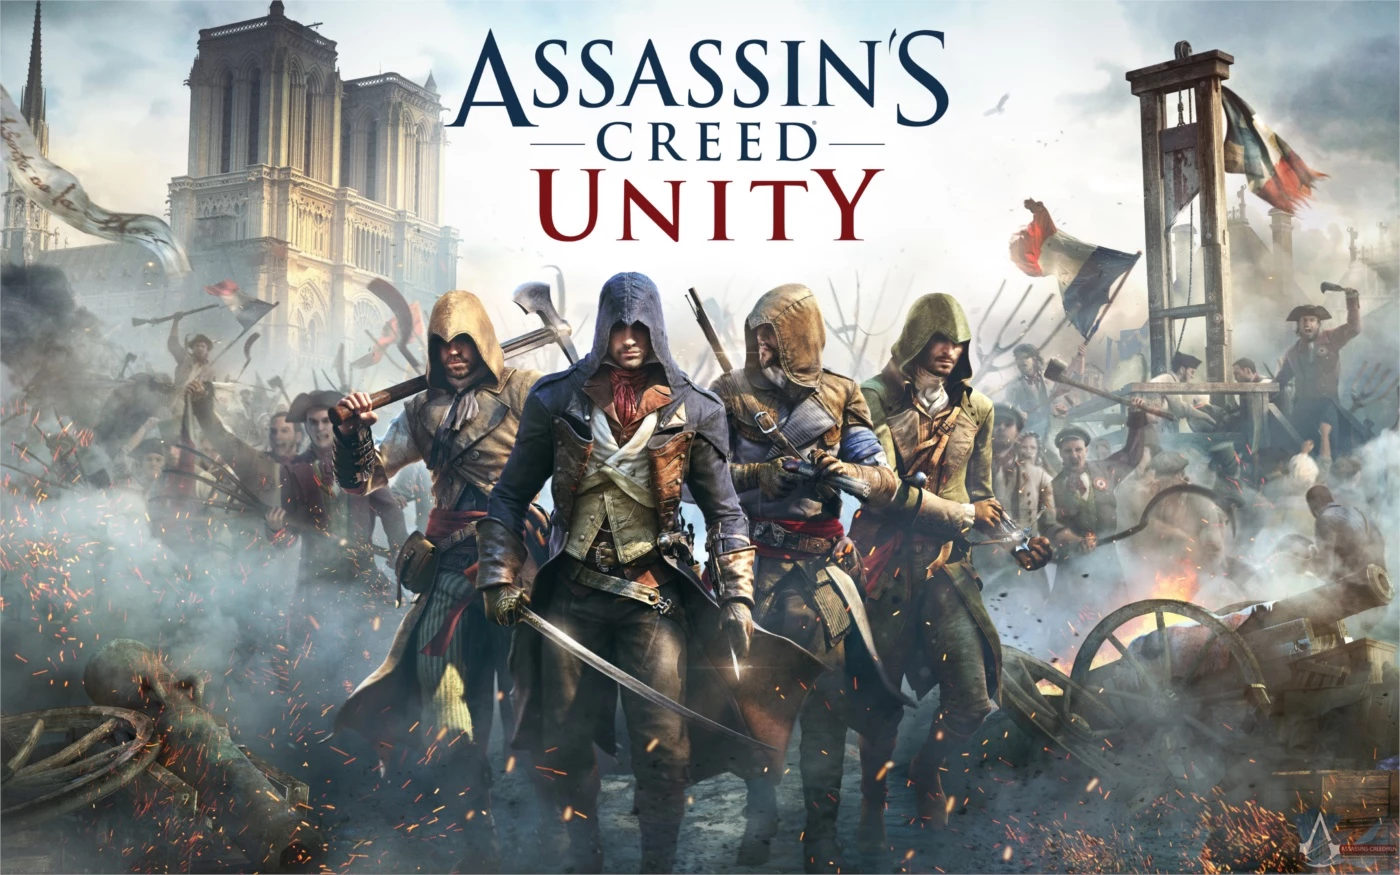 Assassins Creed Valahalla Pc Offline - Uplay Original - Jogos (Mídia  Digital) - DFG